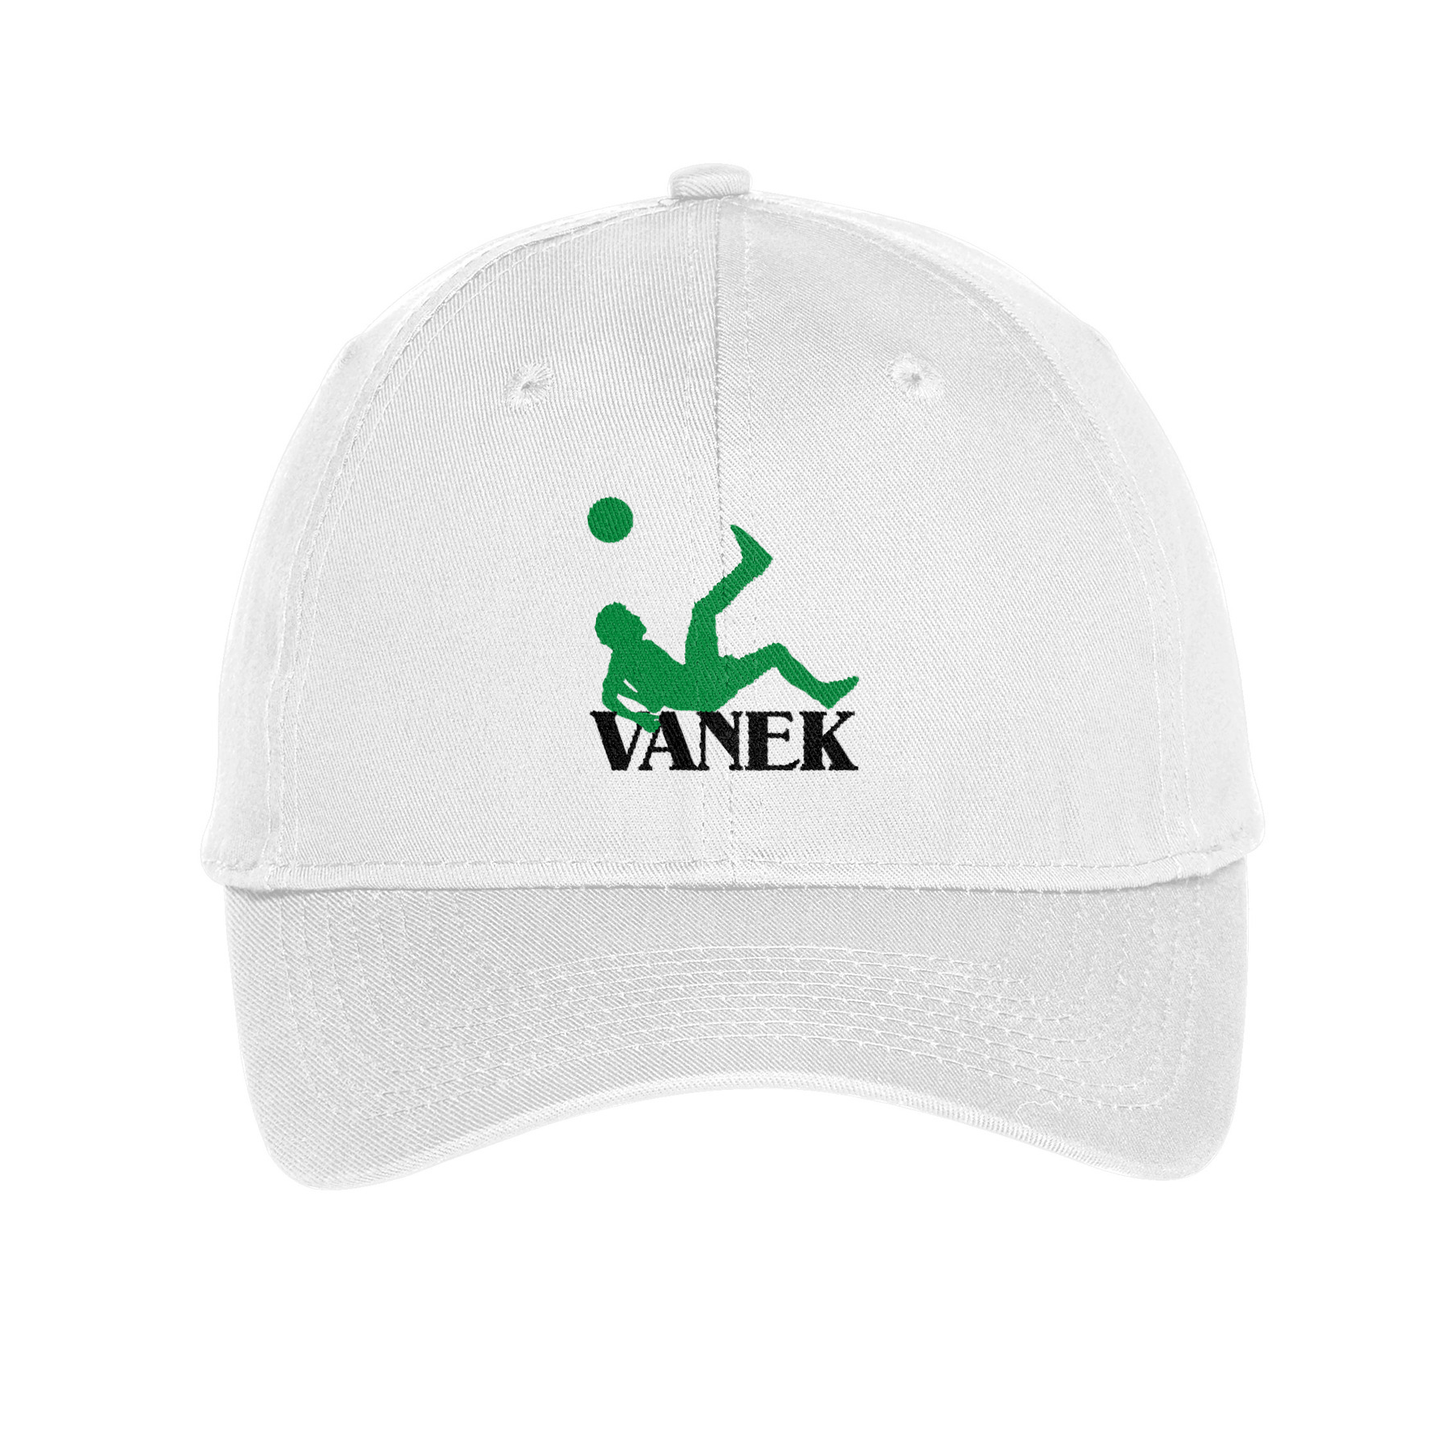 GT Vanek Embroidered Twill Cap